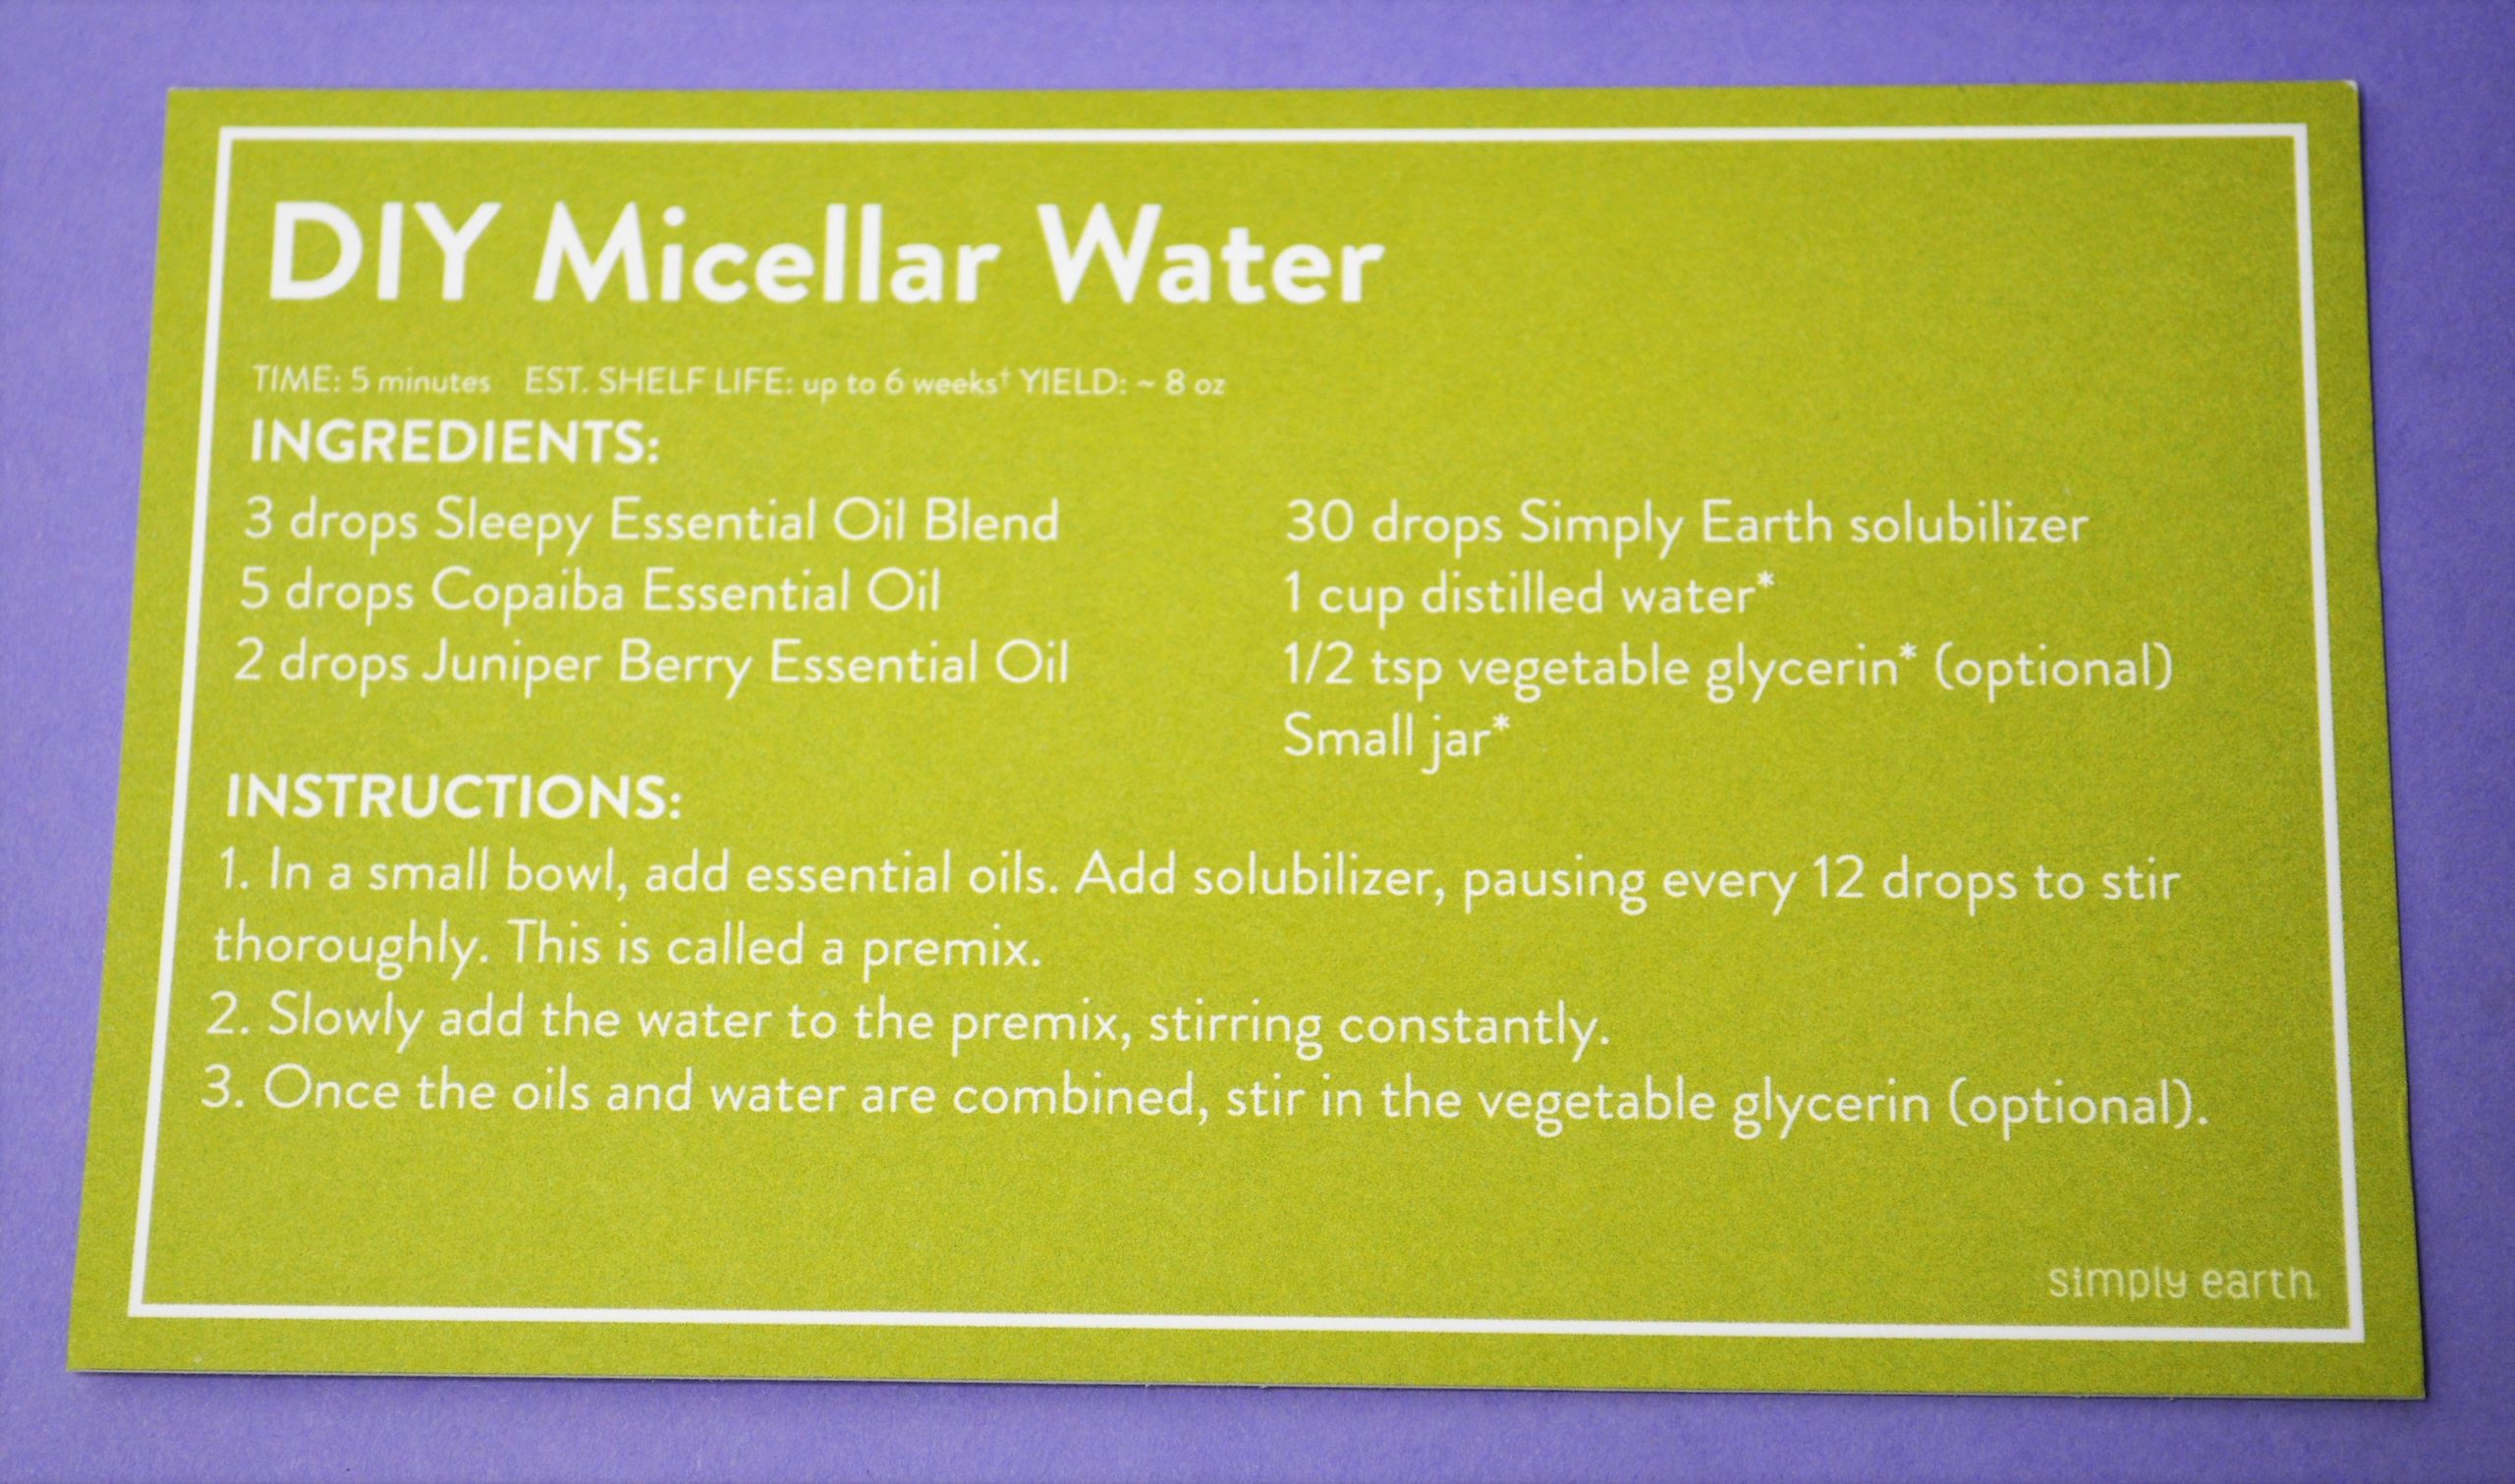 DIY Micellar Water Recipe Card